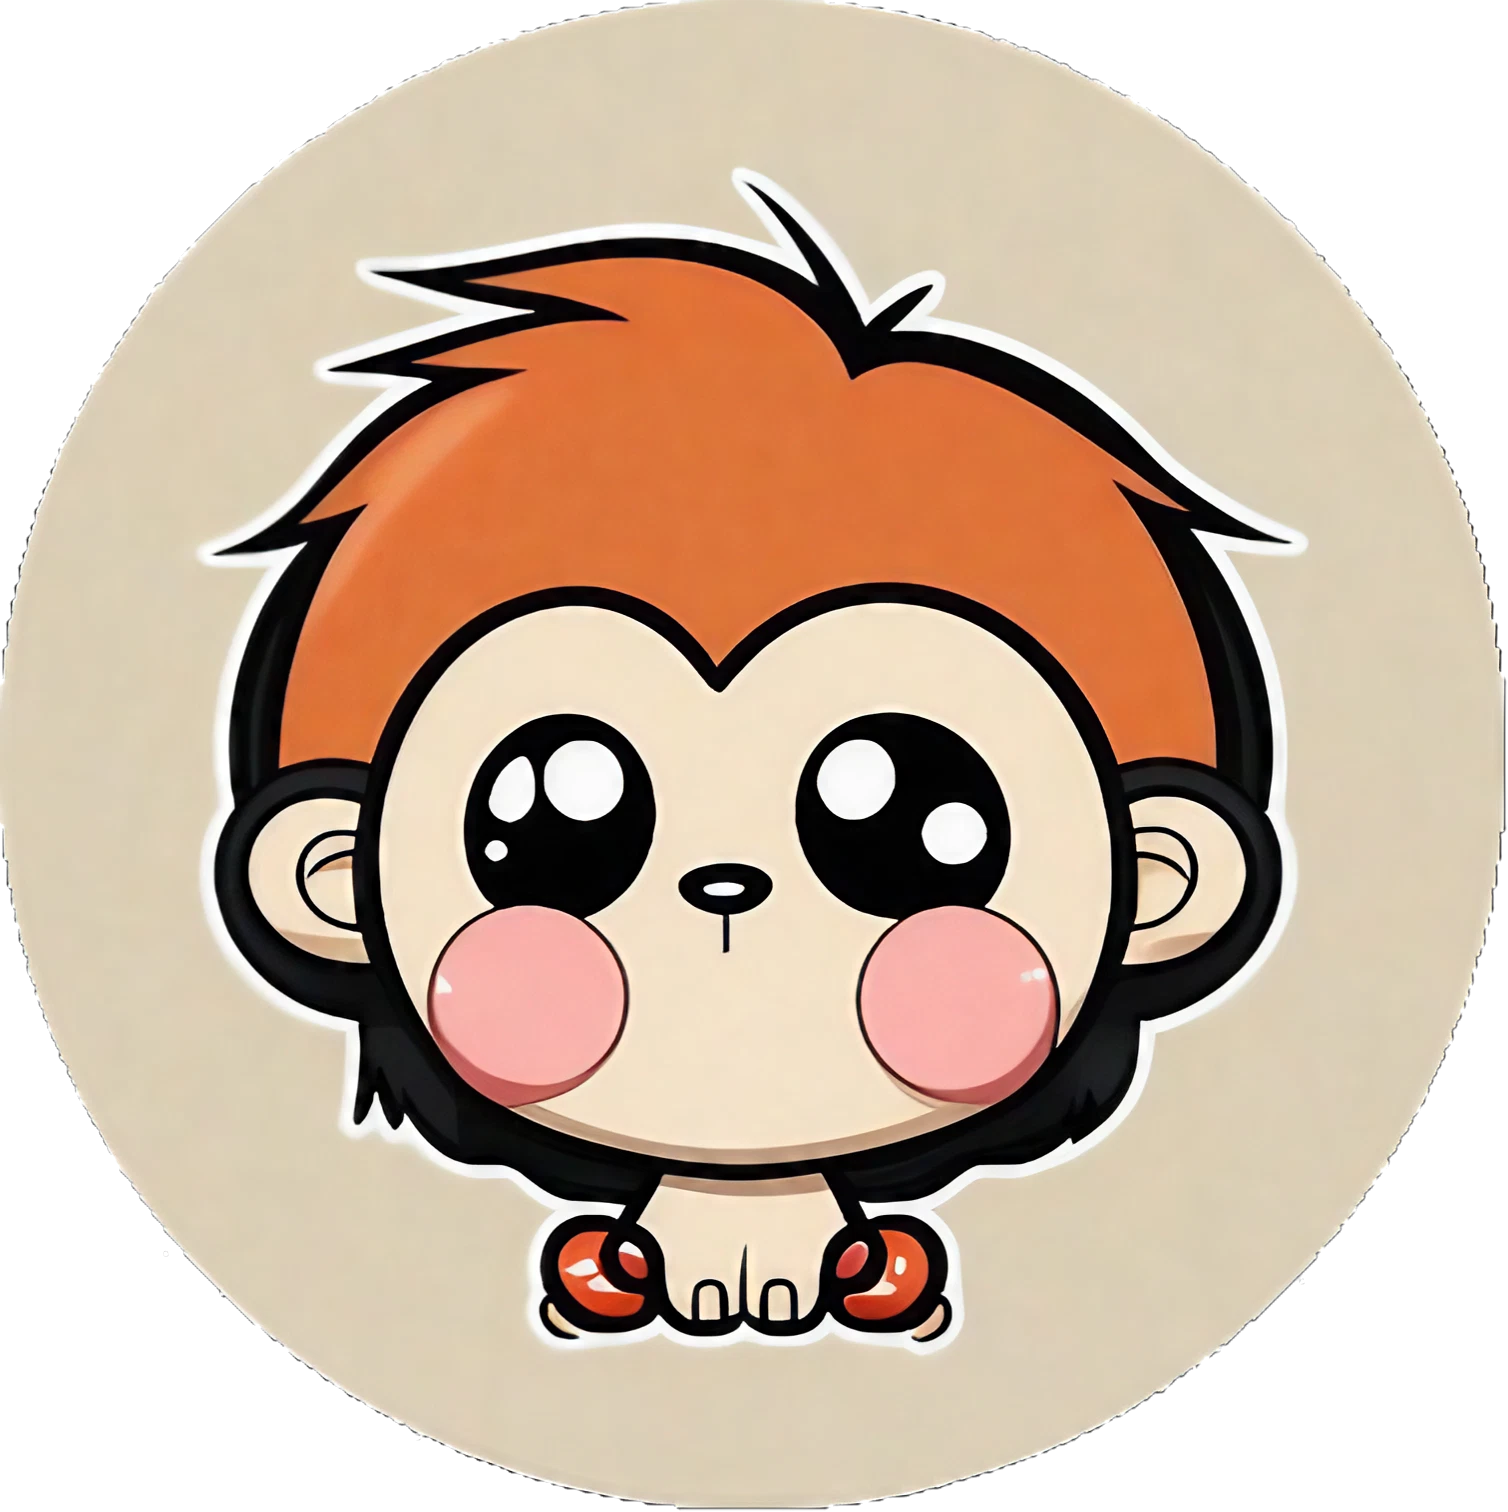 Cute Chibi glubschaugen Affe - Sticker - 3x3cm